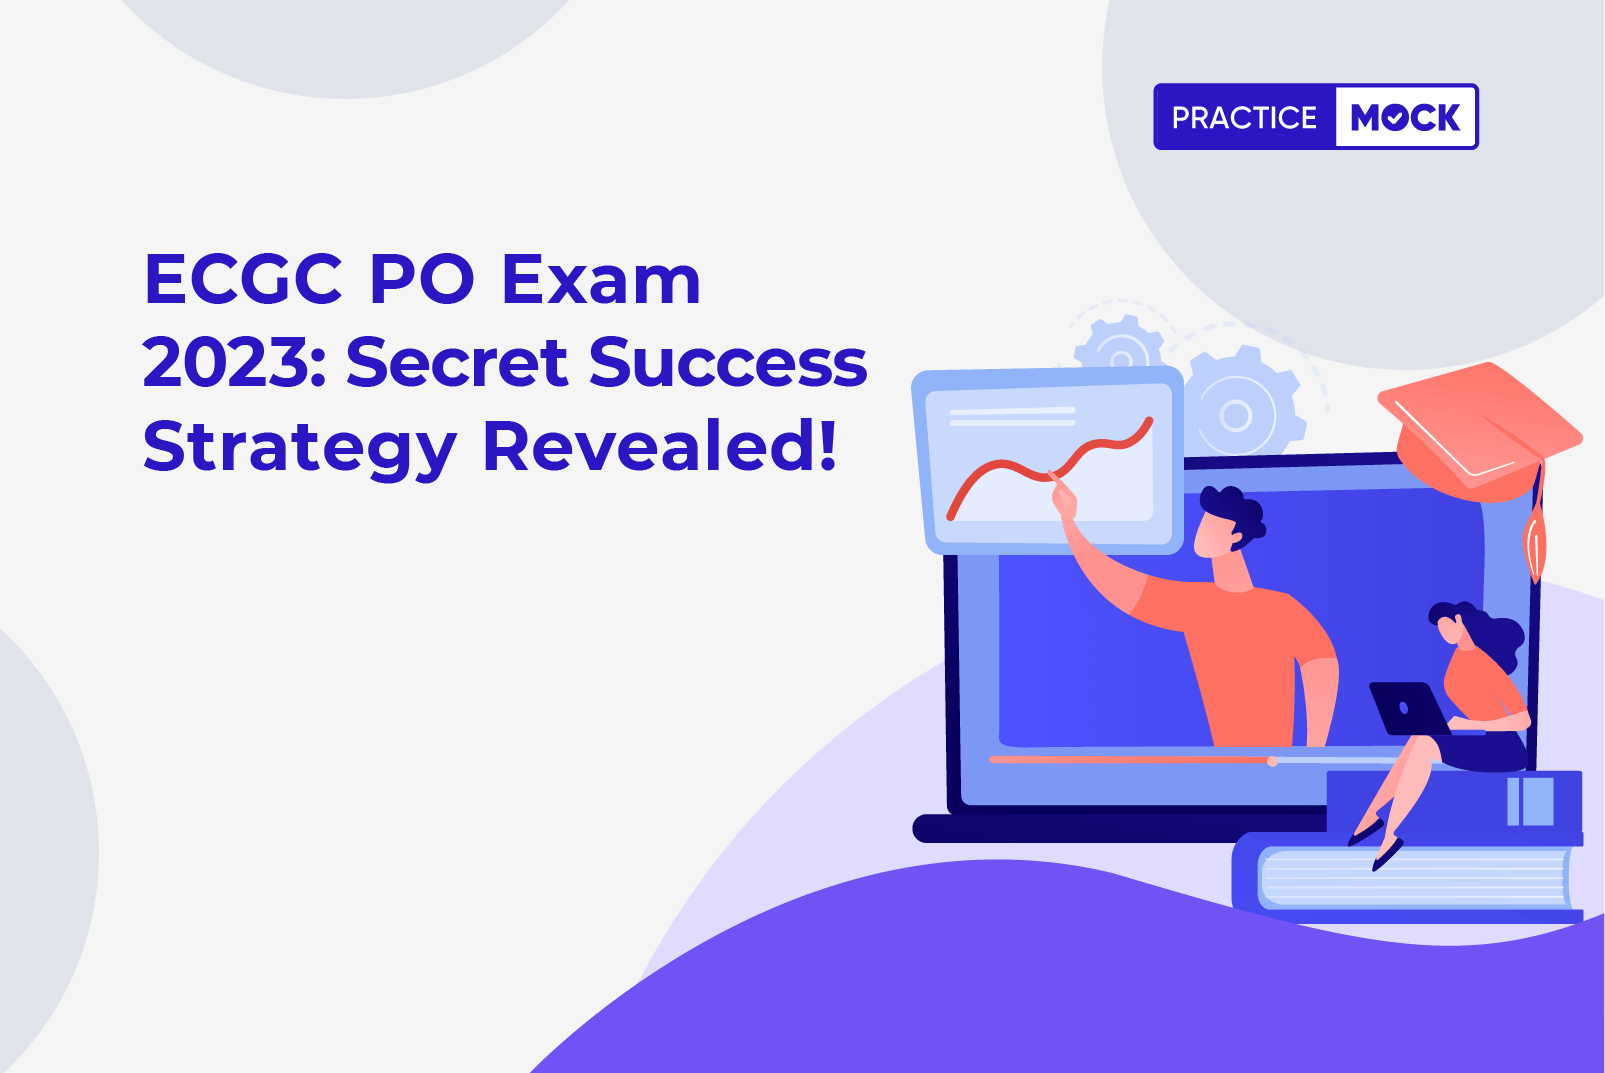 ECGC PO Exam 2023 Secret Success Strategy Revealed!